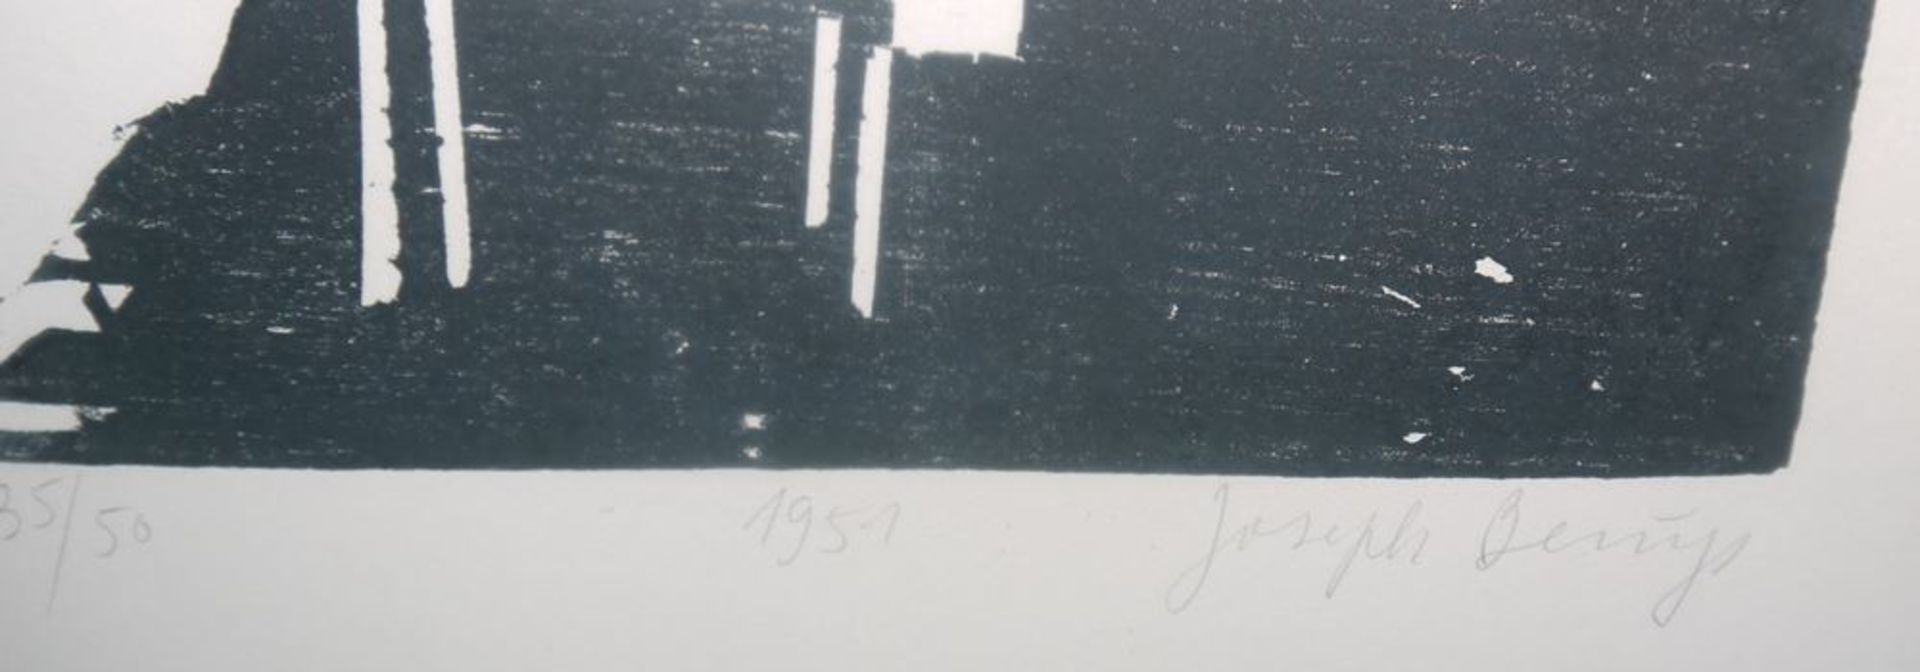 Joseph Beuys, Esse 1951, Holzschnitt, später Abzug 1973-74 - Image 2 of 3